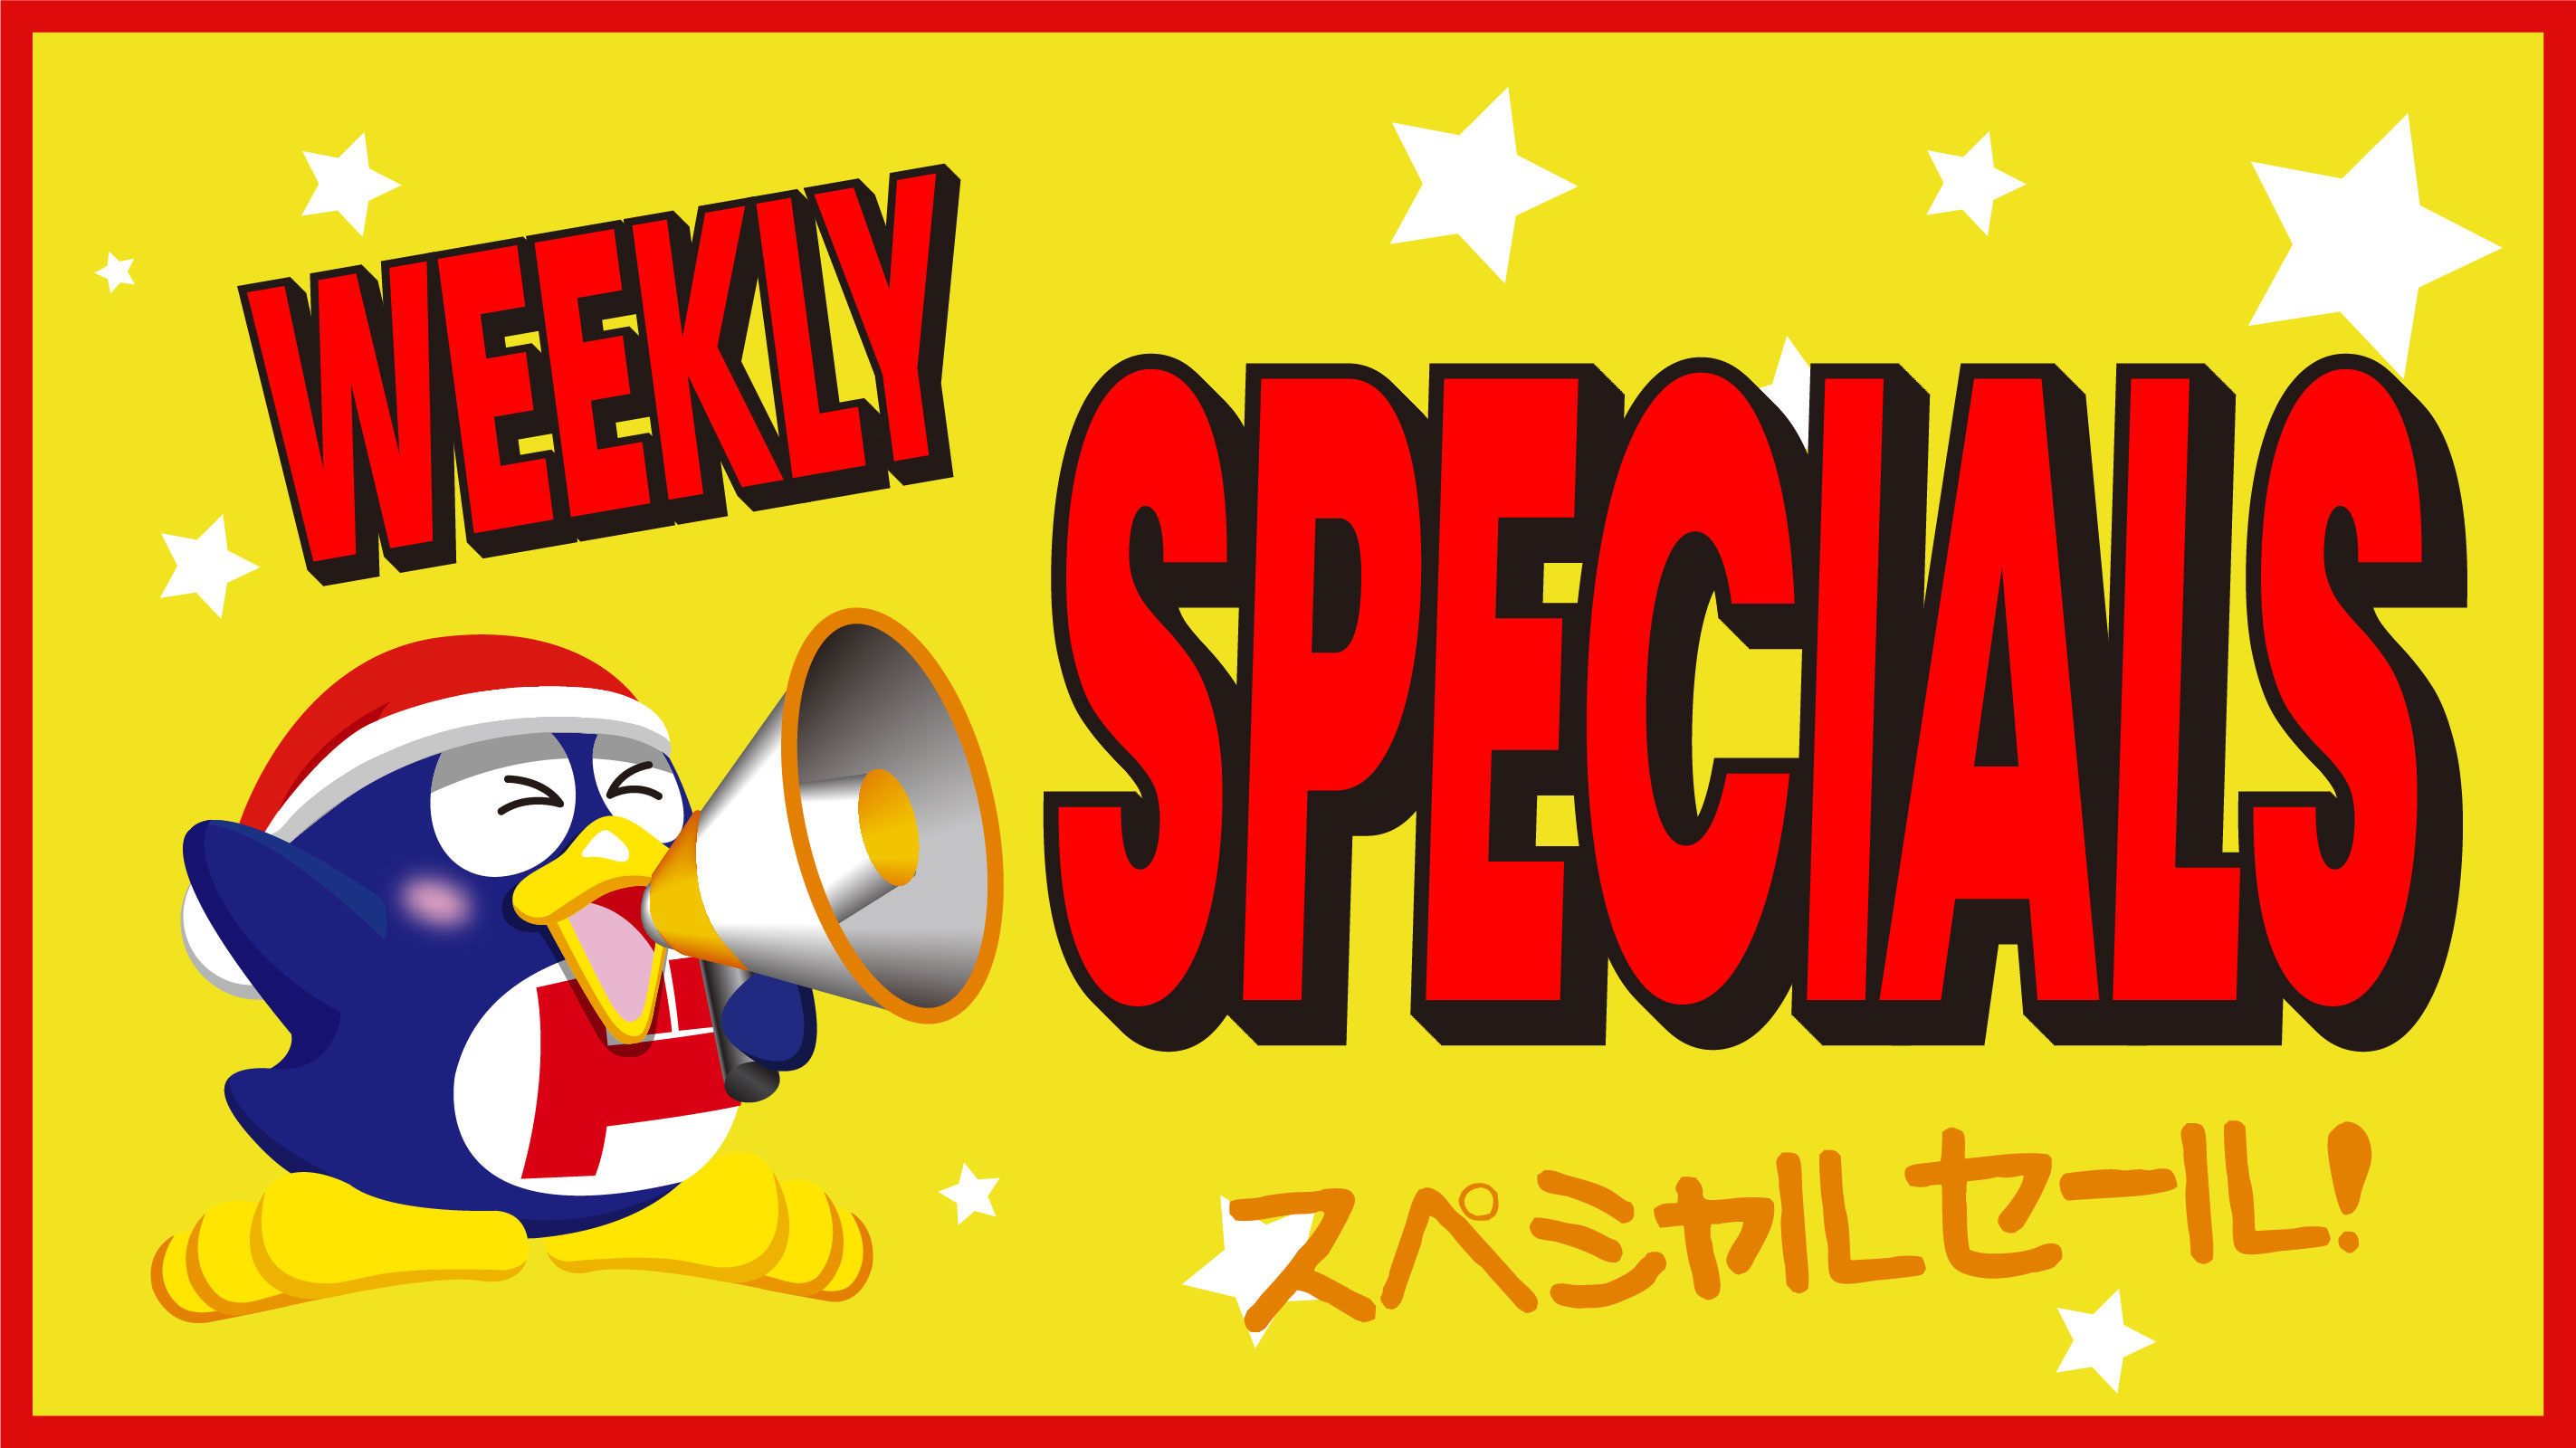 Weekly Specials Banner Vertical